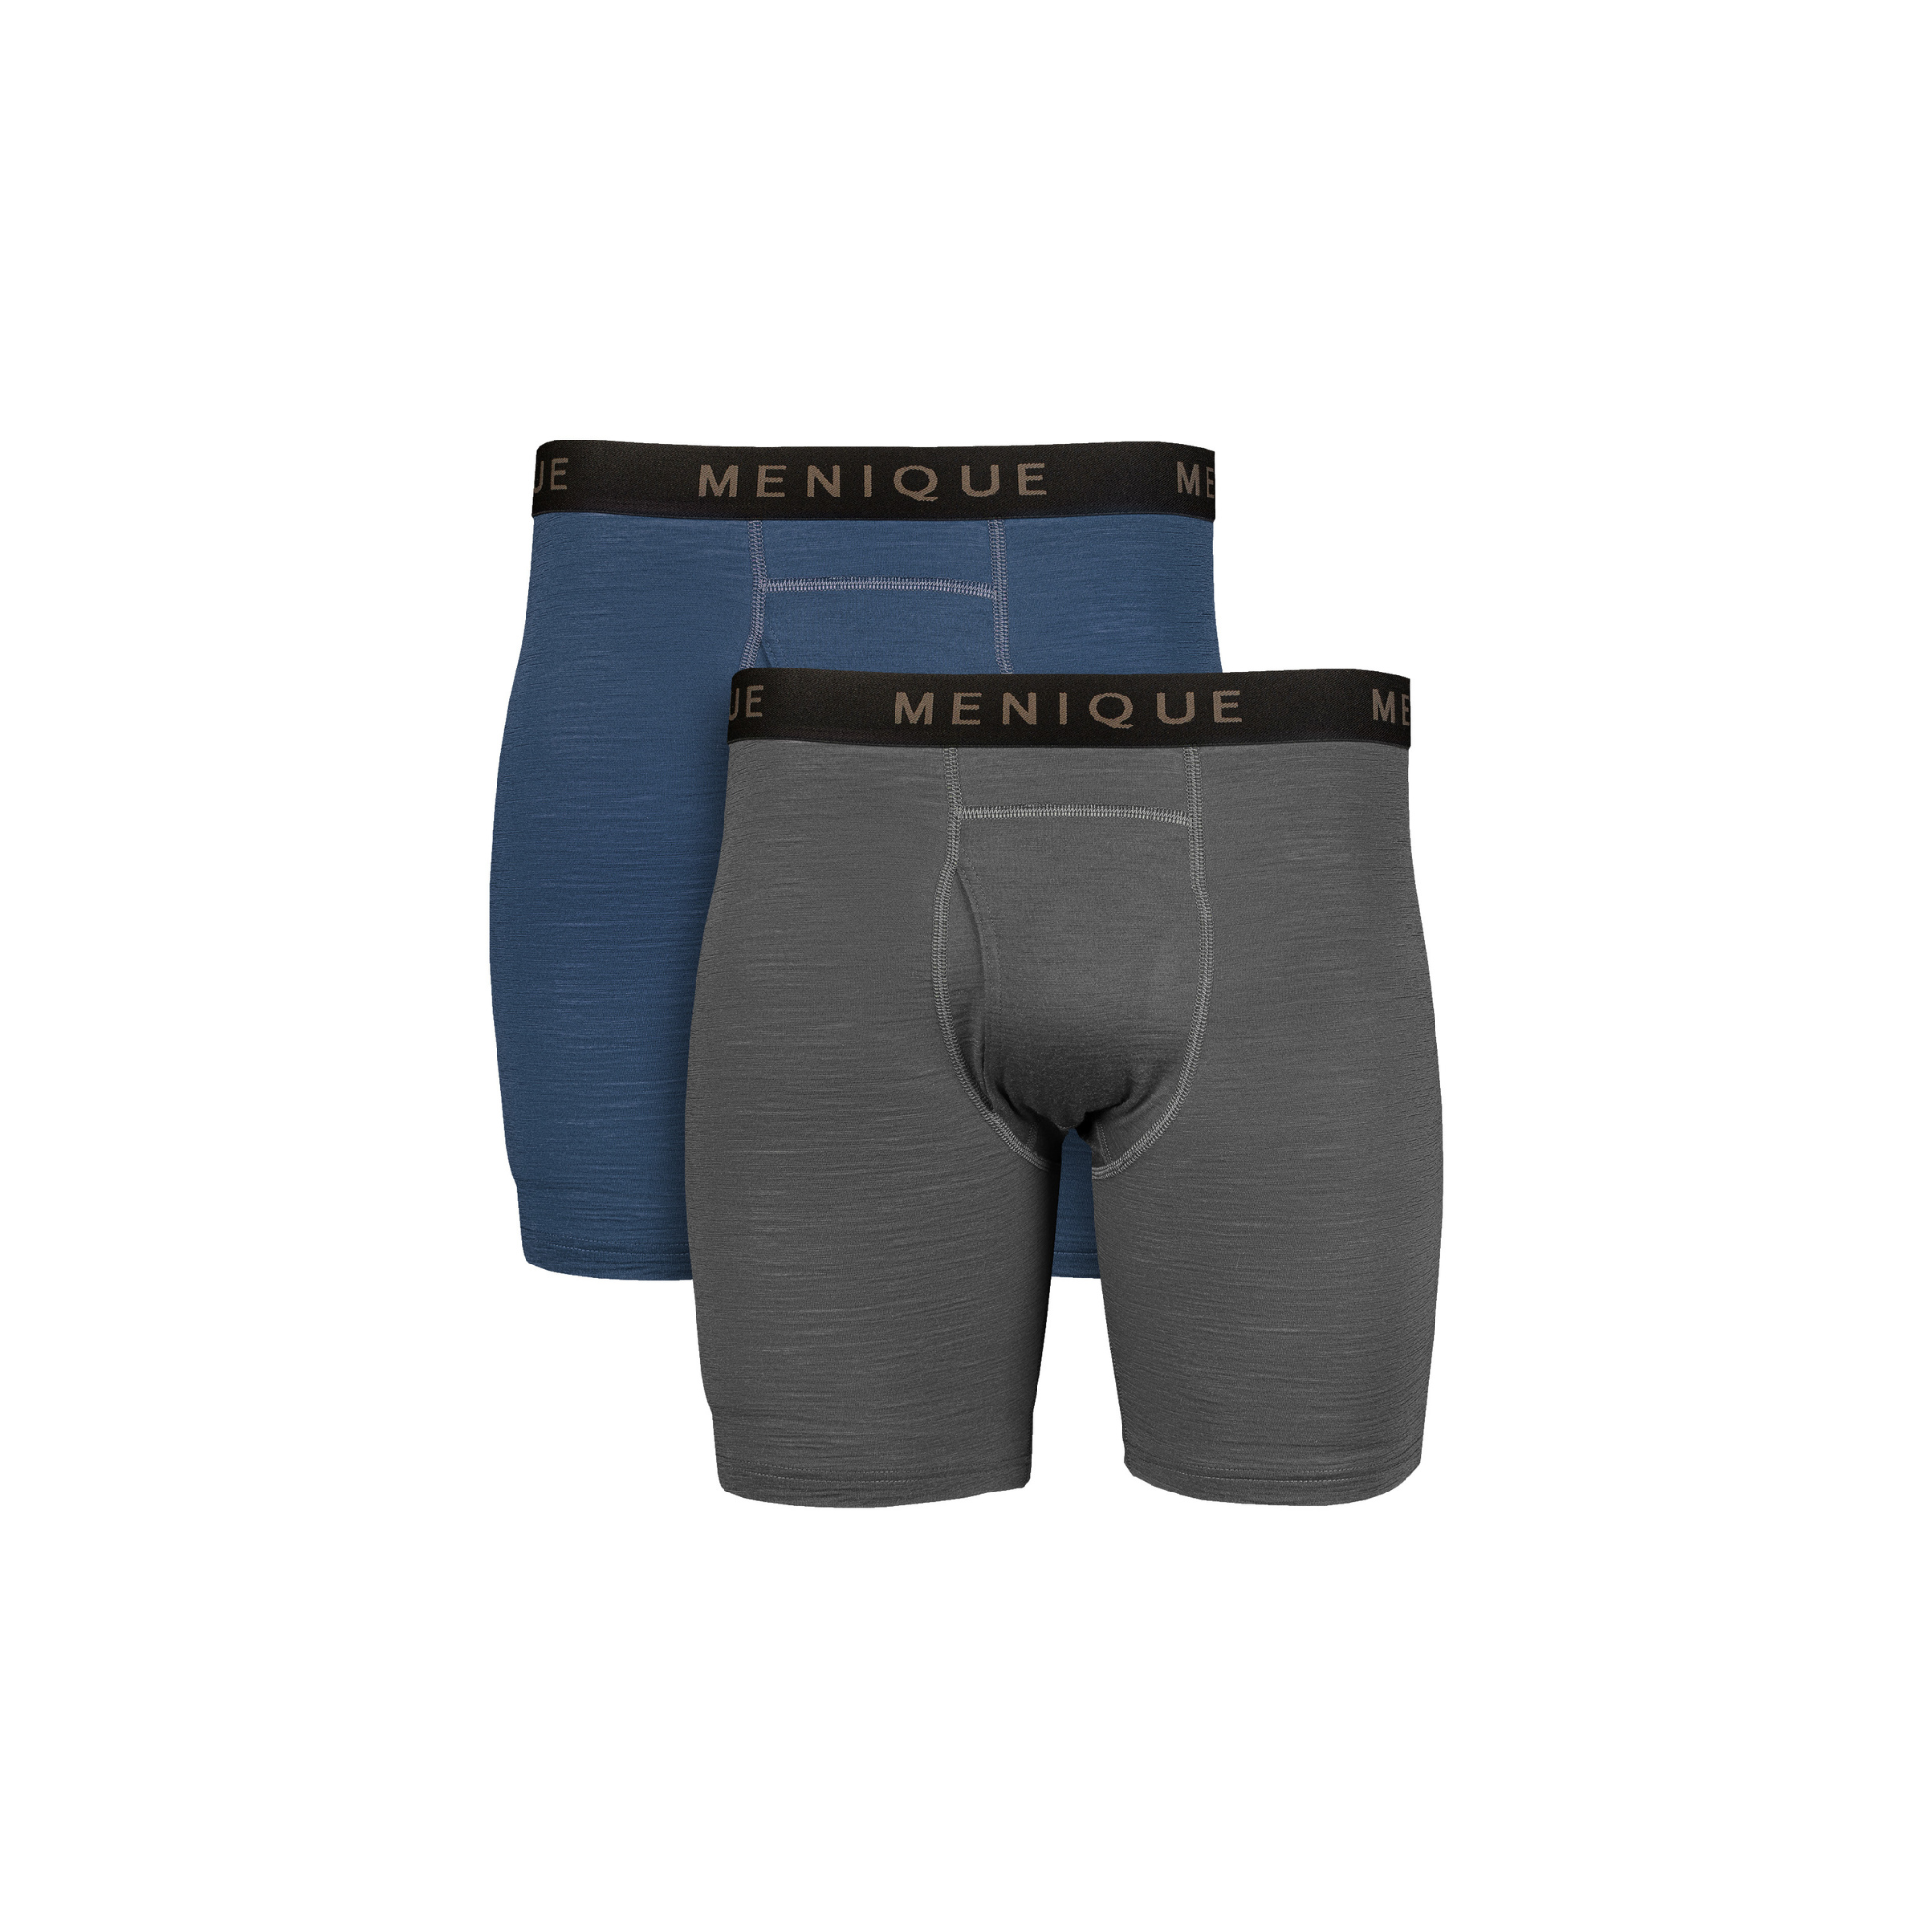 Merino Wool Men's Boxer Shorts 2-Pack ❤️ menique